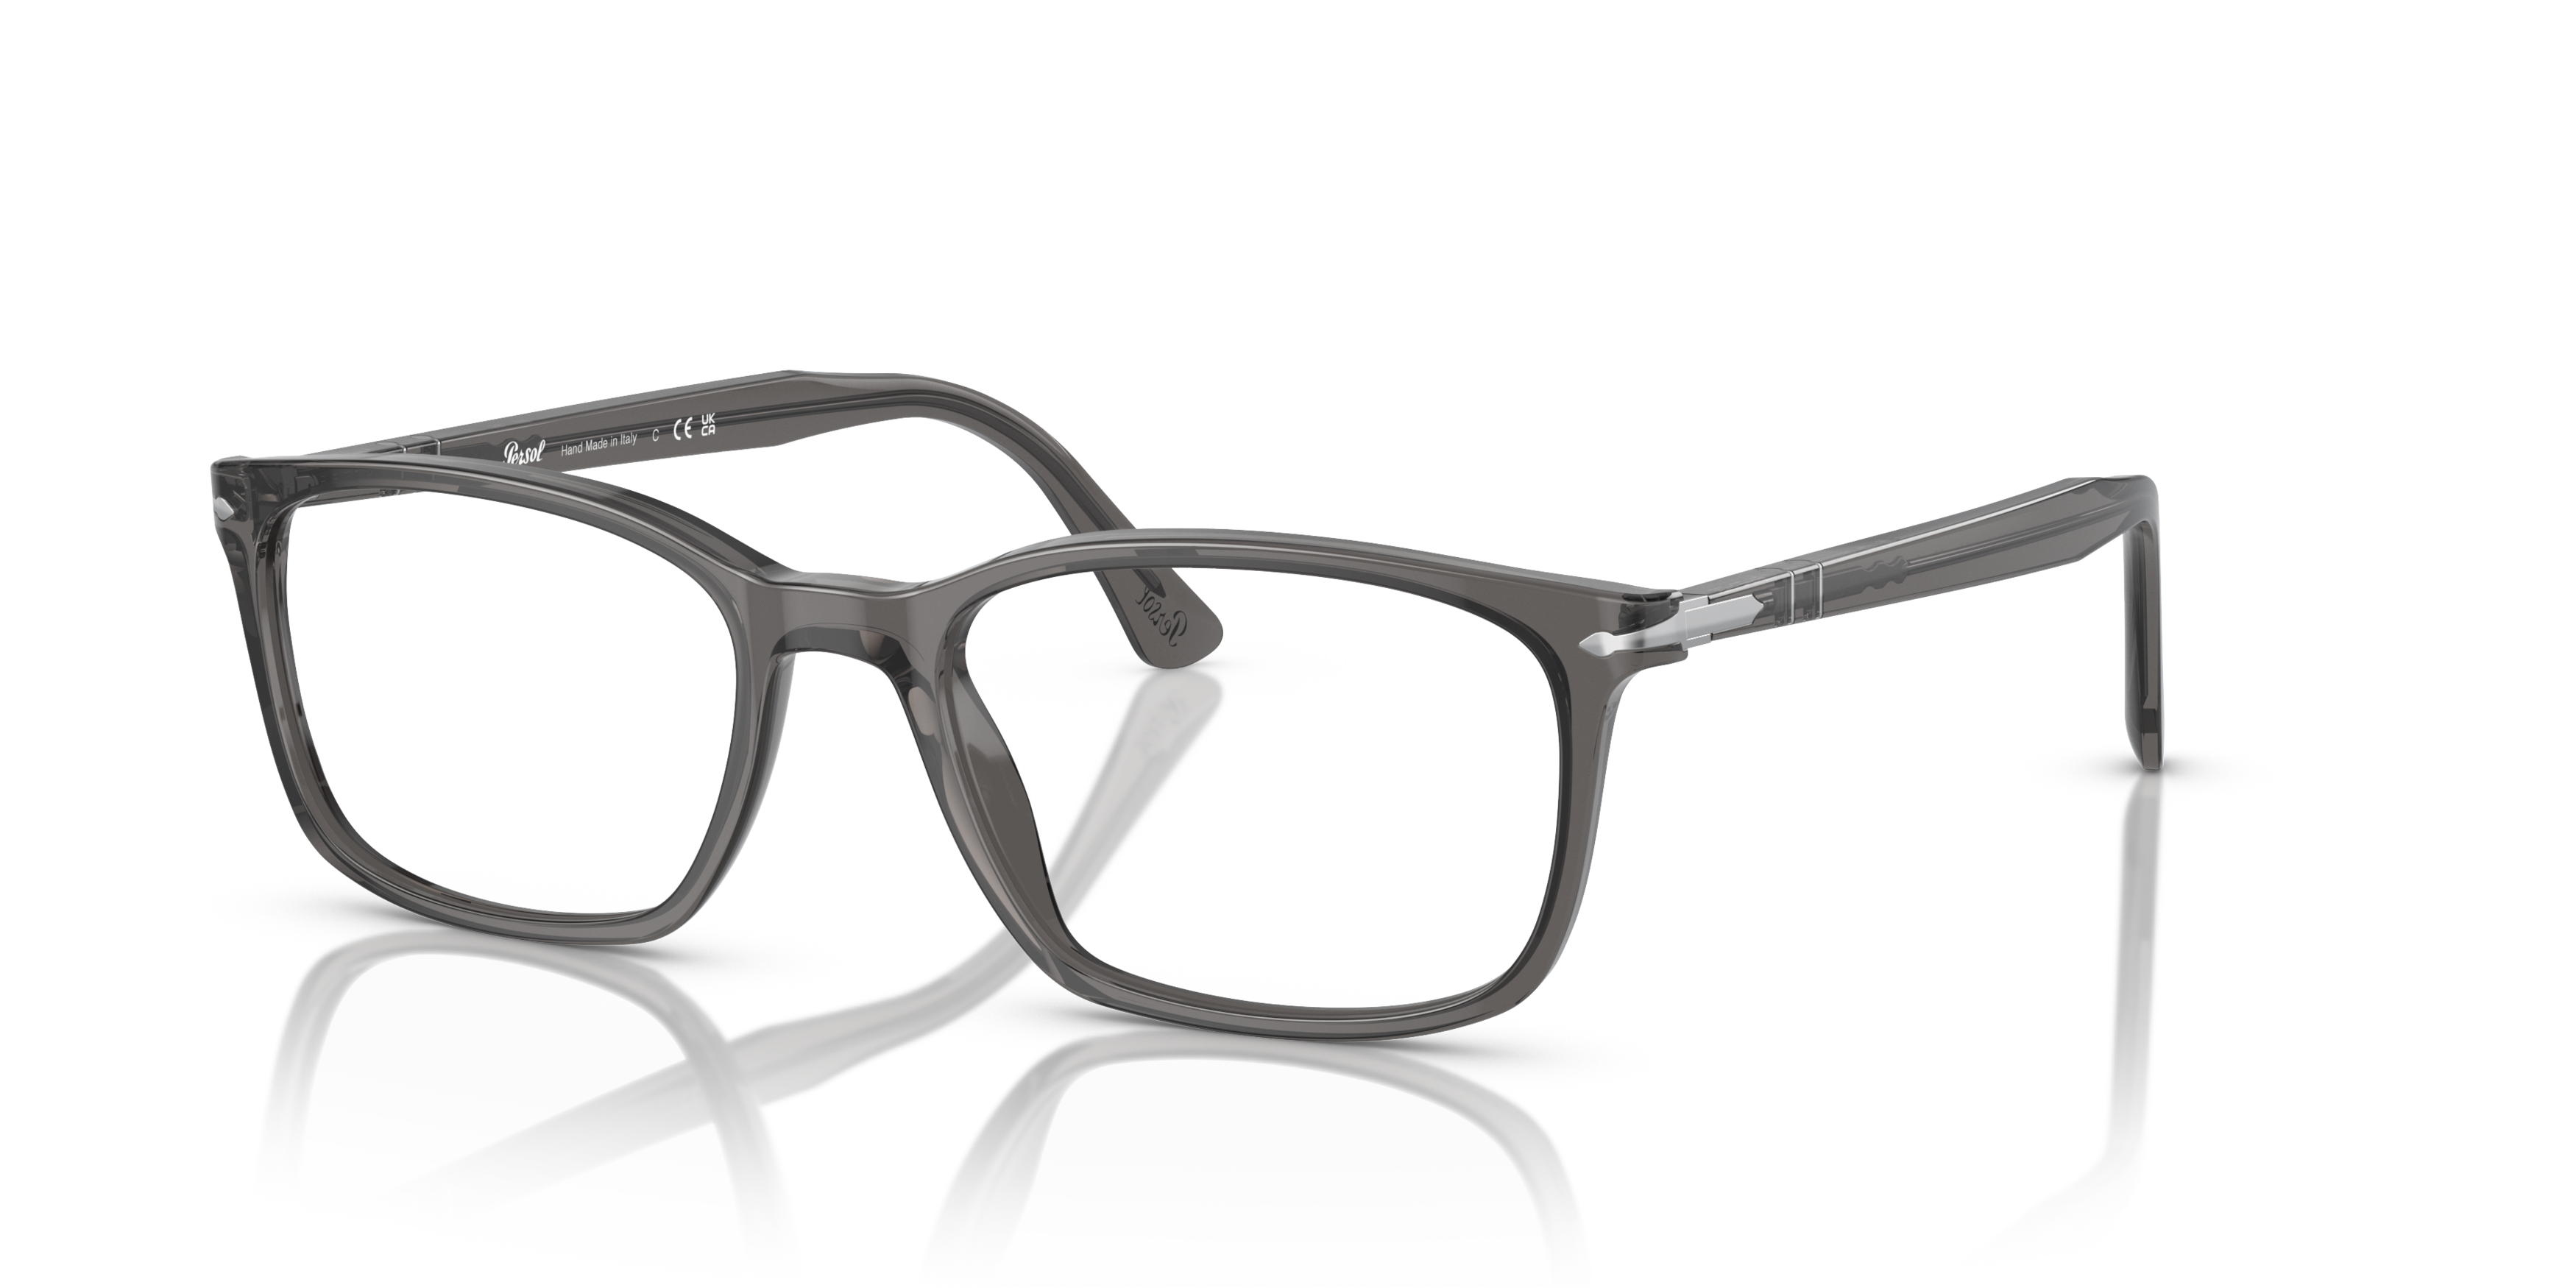 Angle_Left01 Persol PO 3189V Glasses Transparent / Black